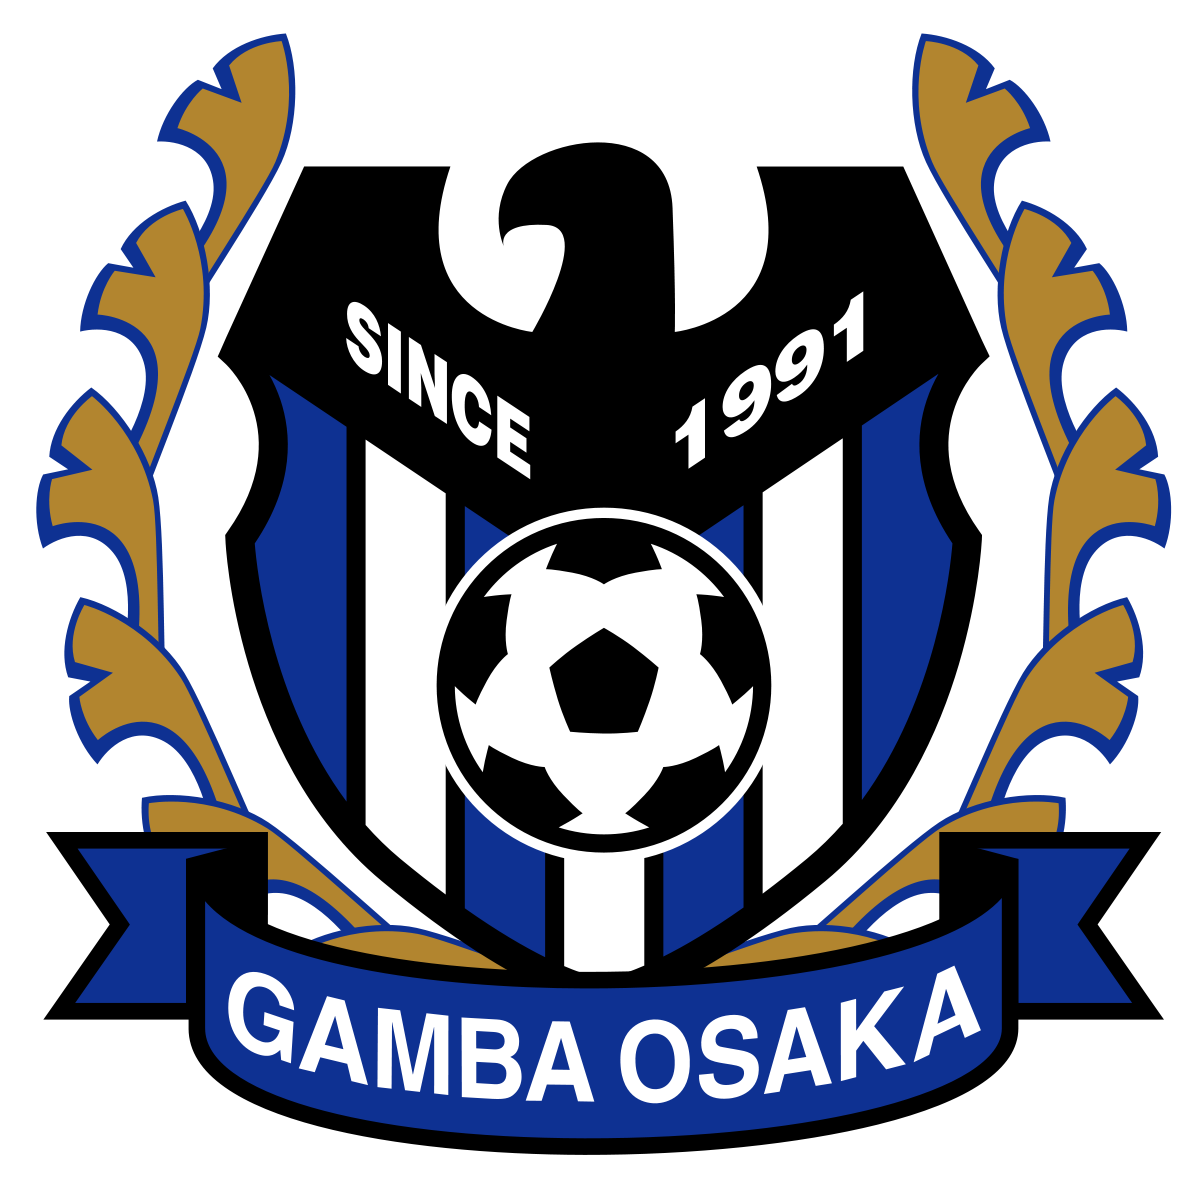 Gamba Osaka-2 logo